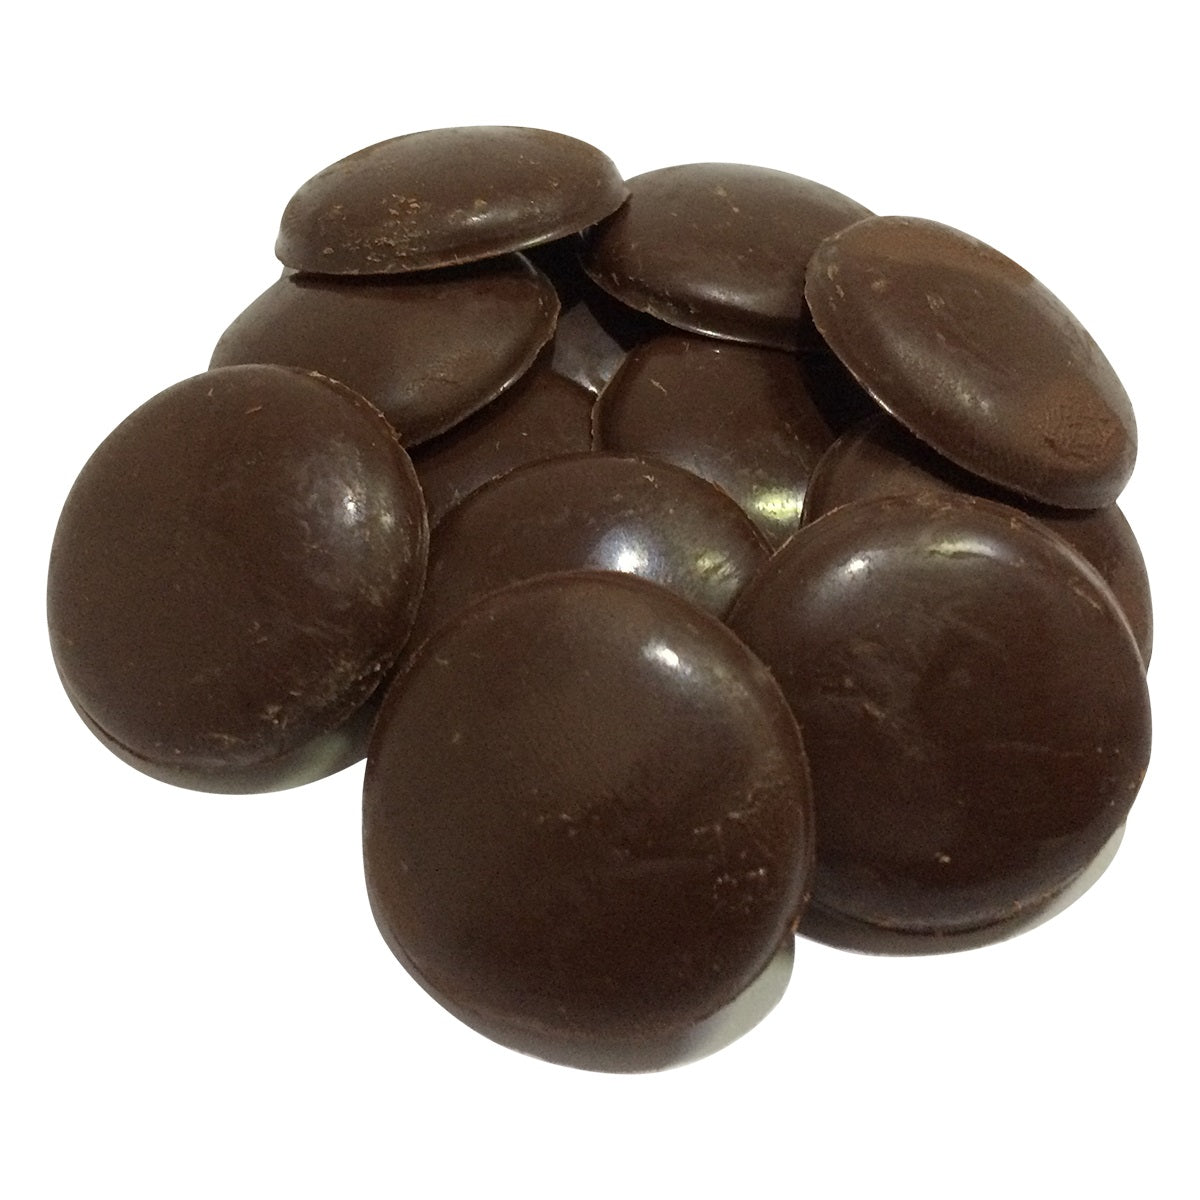 Organic 80% Chocolate Sweetened With Panela - Wafers